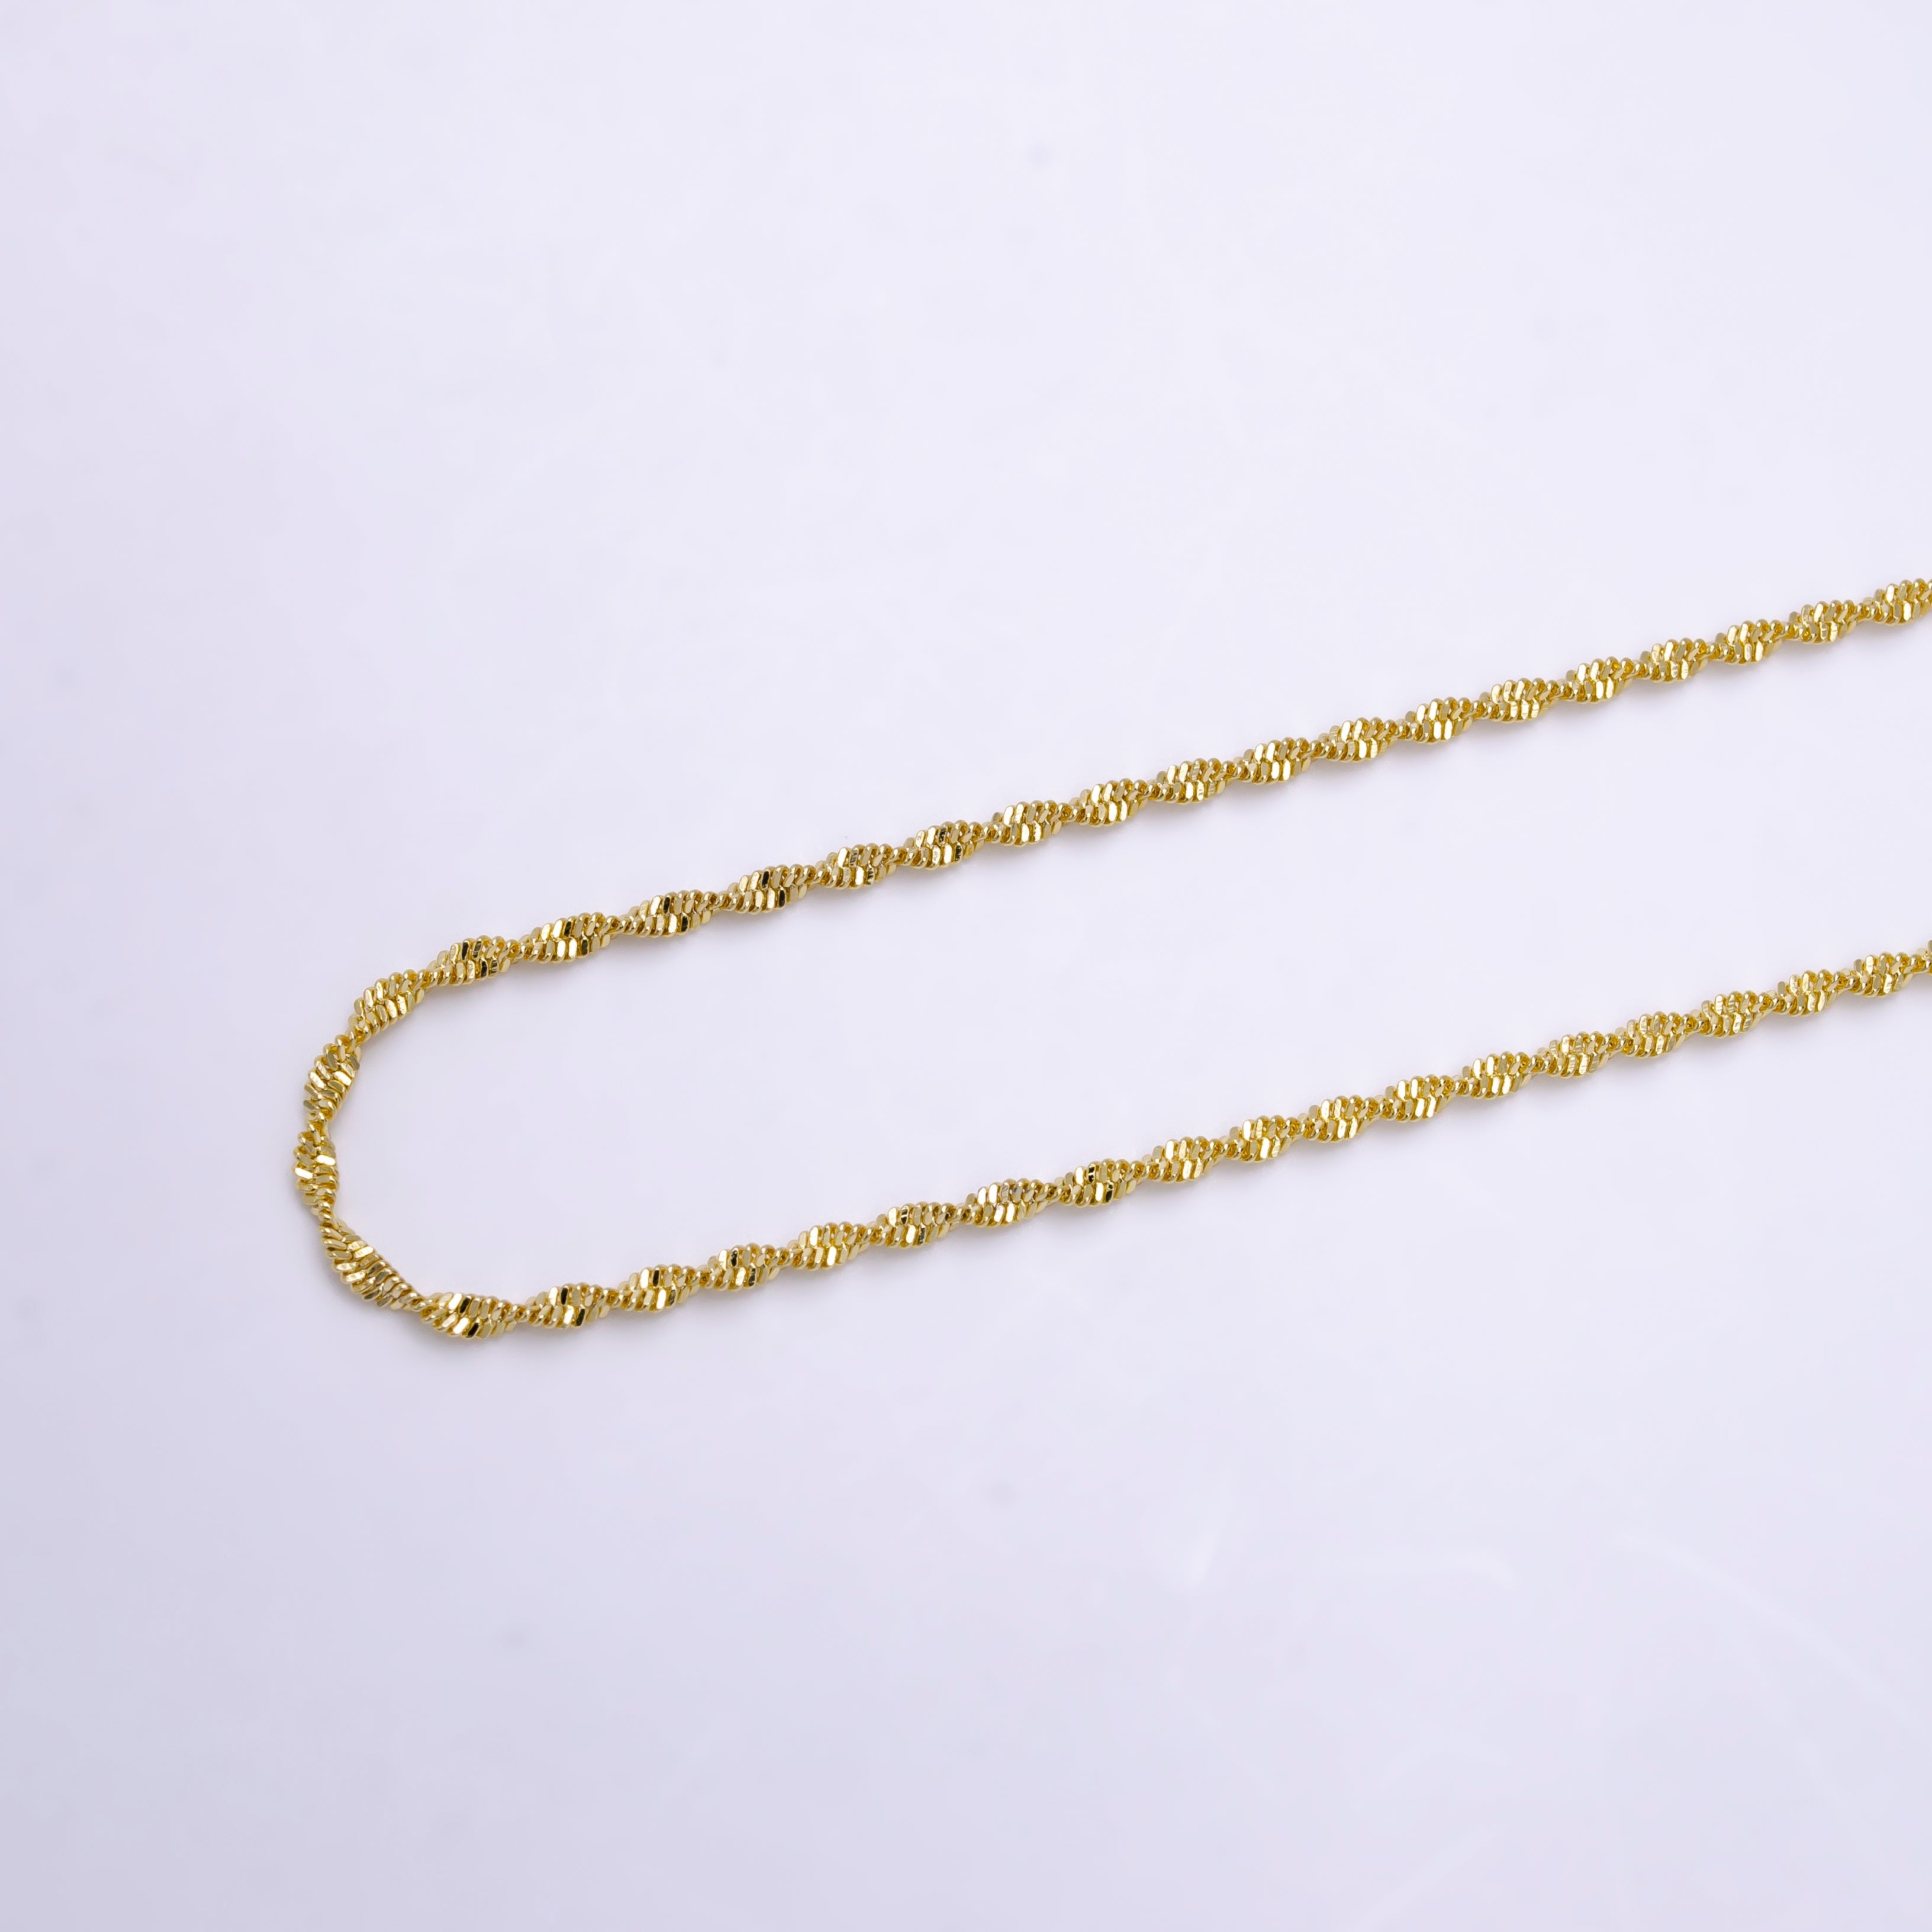 Dainty Gold Chain Necklace, Twist Chain Necklace Ready To Wear for Jewelry Making WA-1118 - DLUXCA